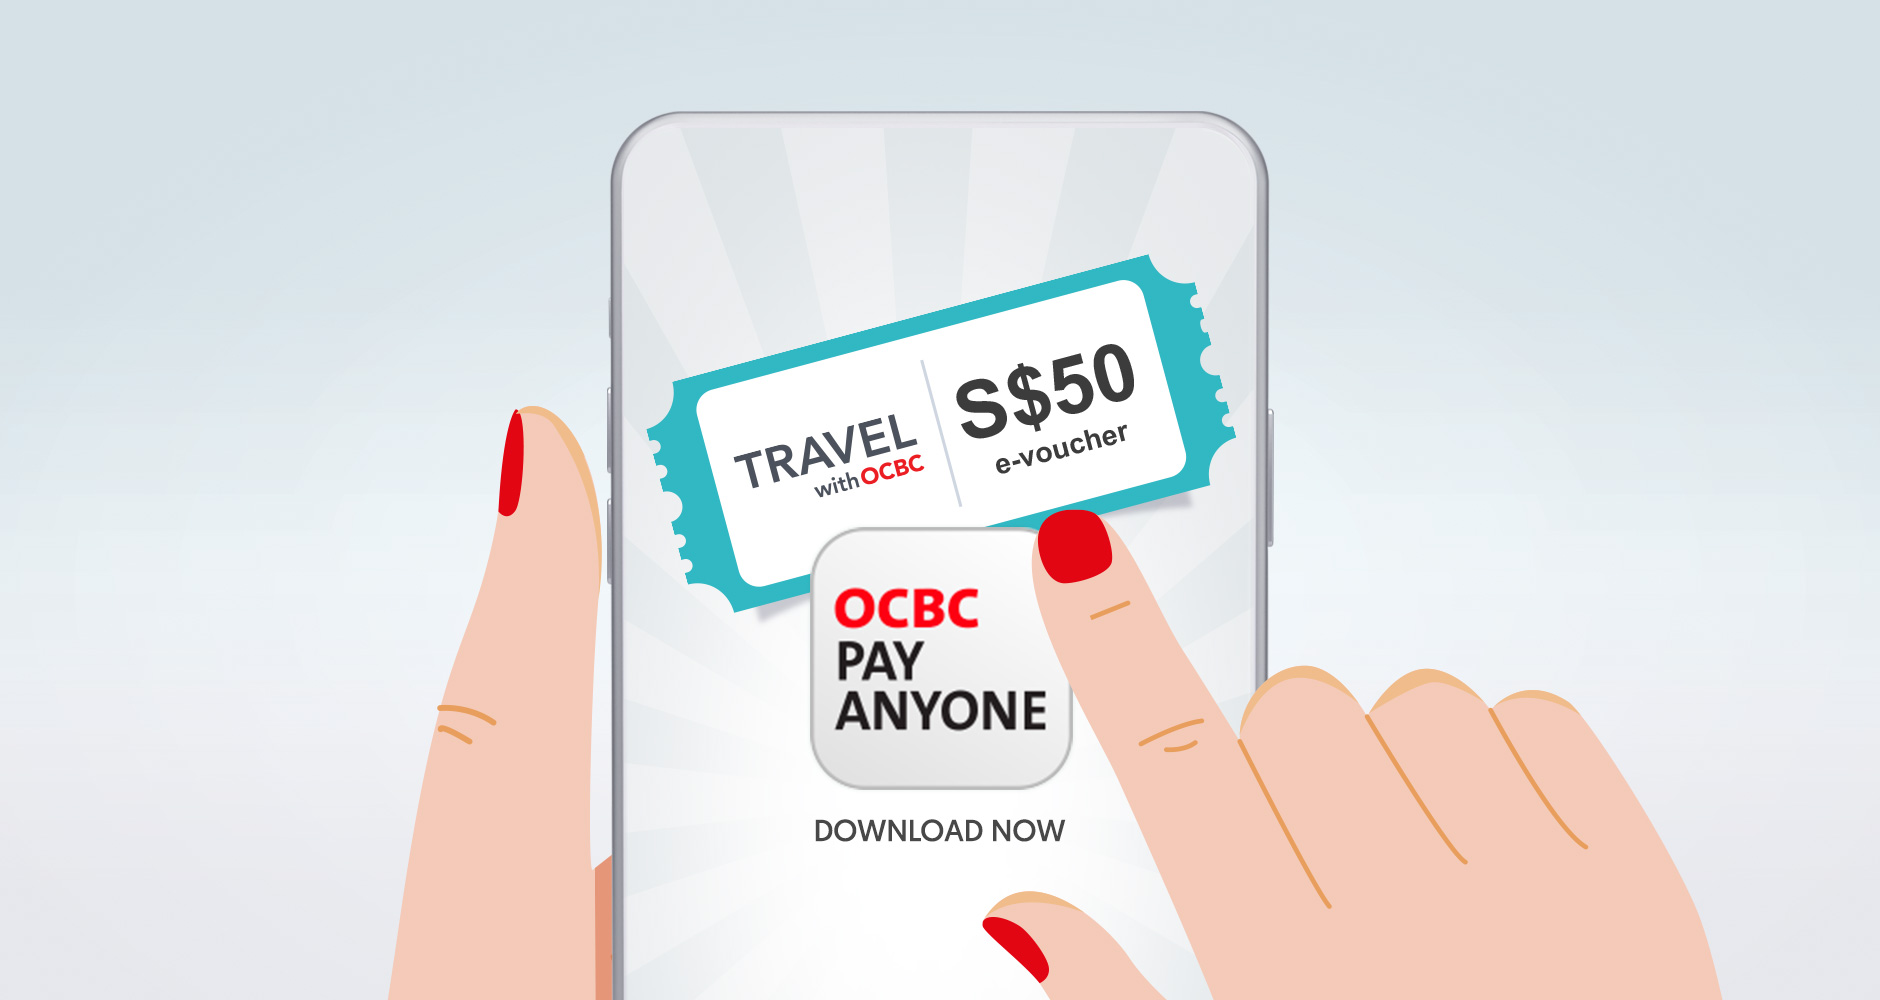 Travel with OCBC PAO Promo